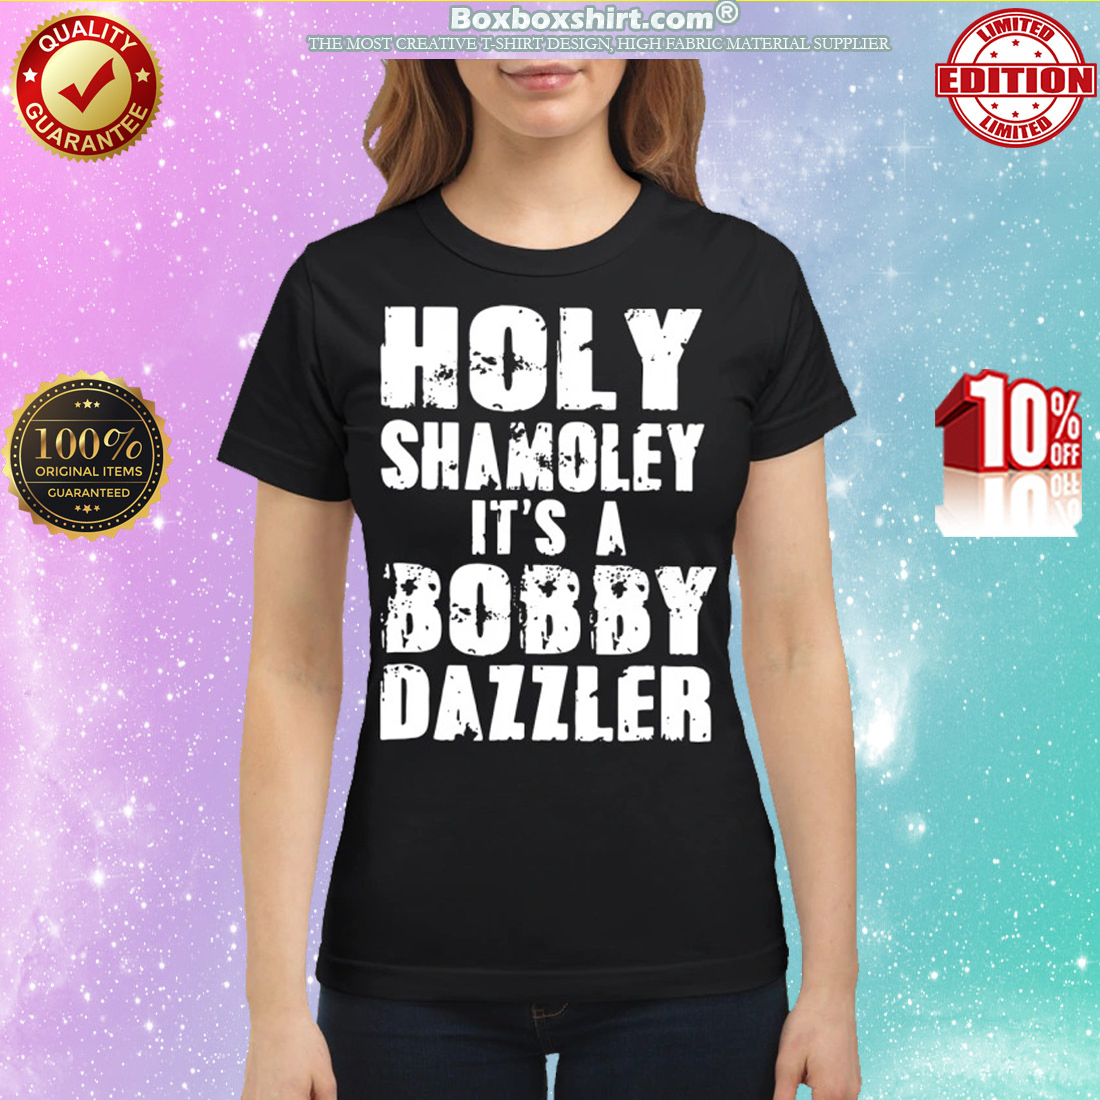 Holy Shamoley it's a Bobby Dazzler classic shirt